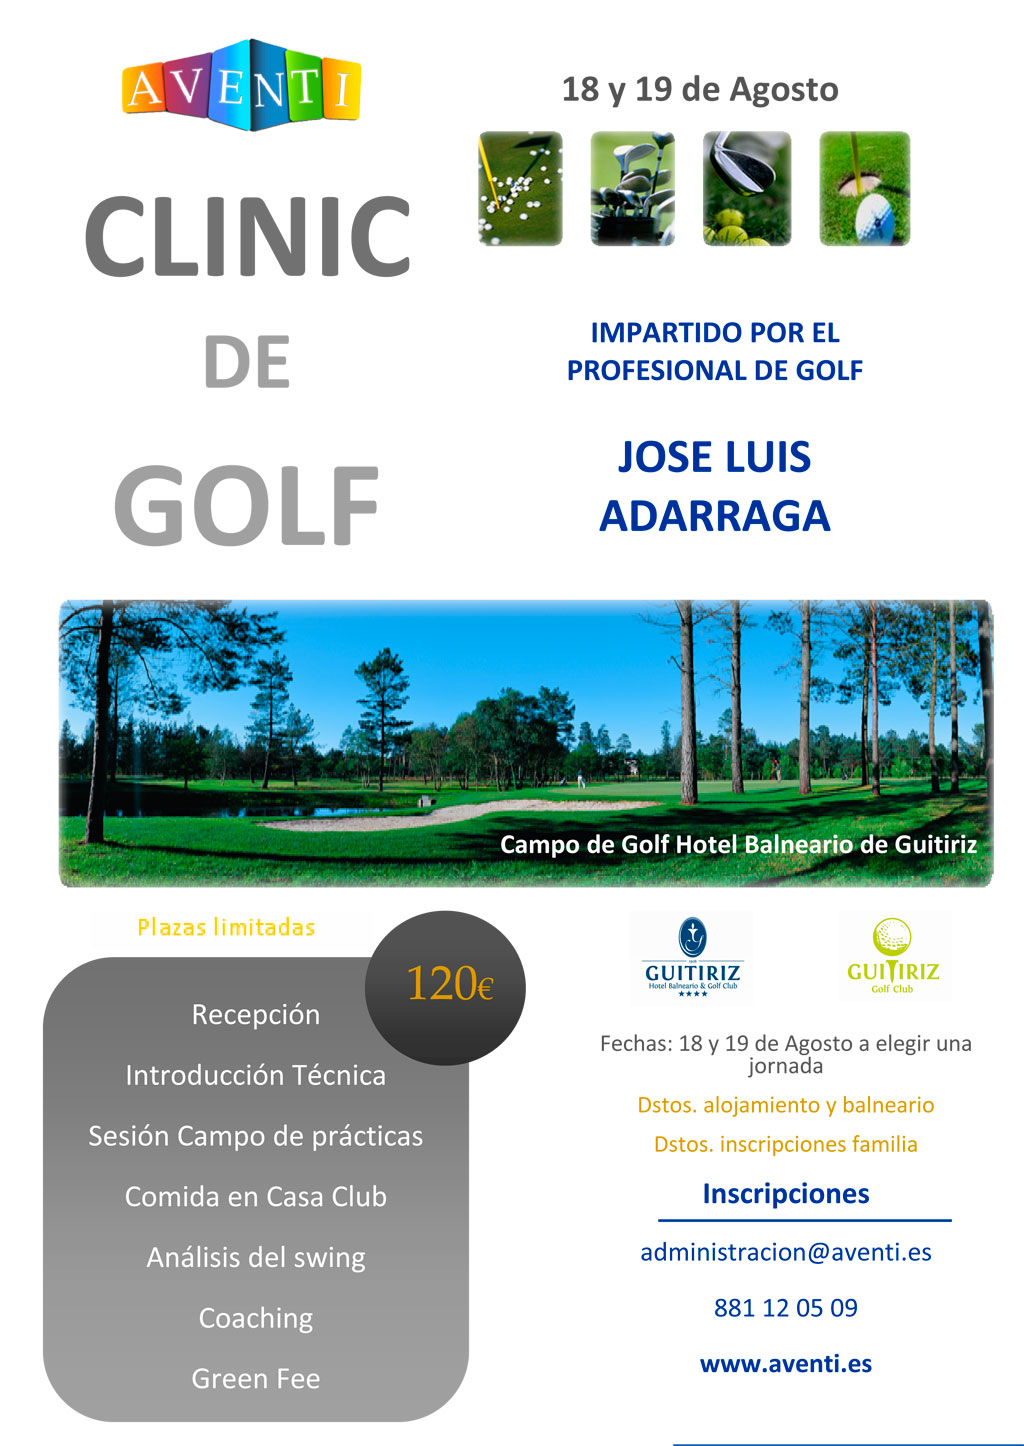 Clinic de golf en el Campo Balneario de Guitiriz